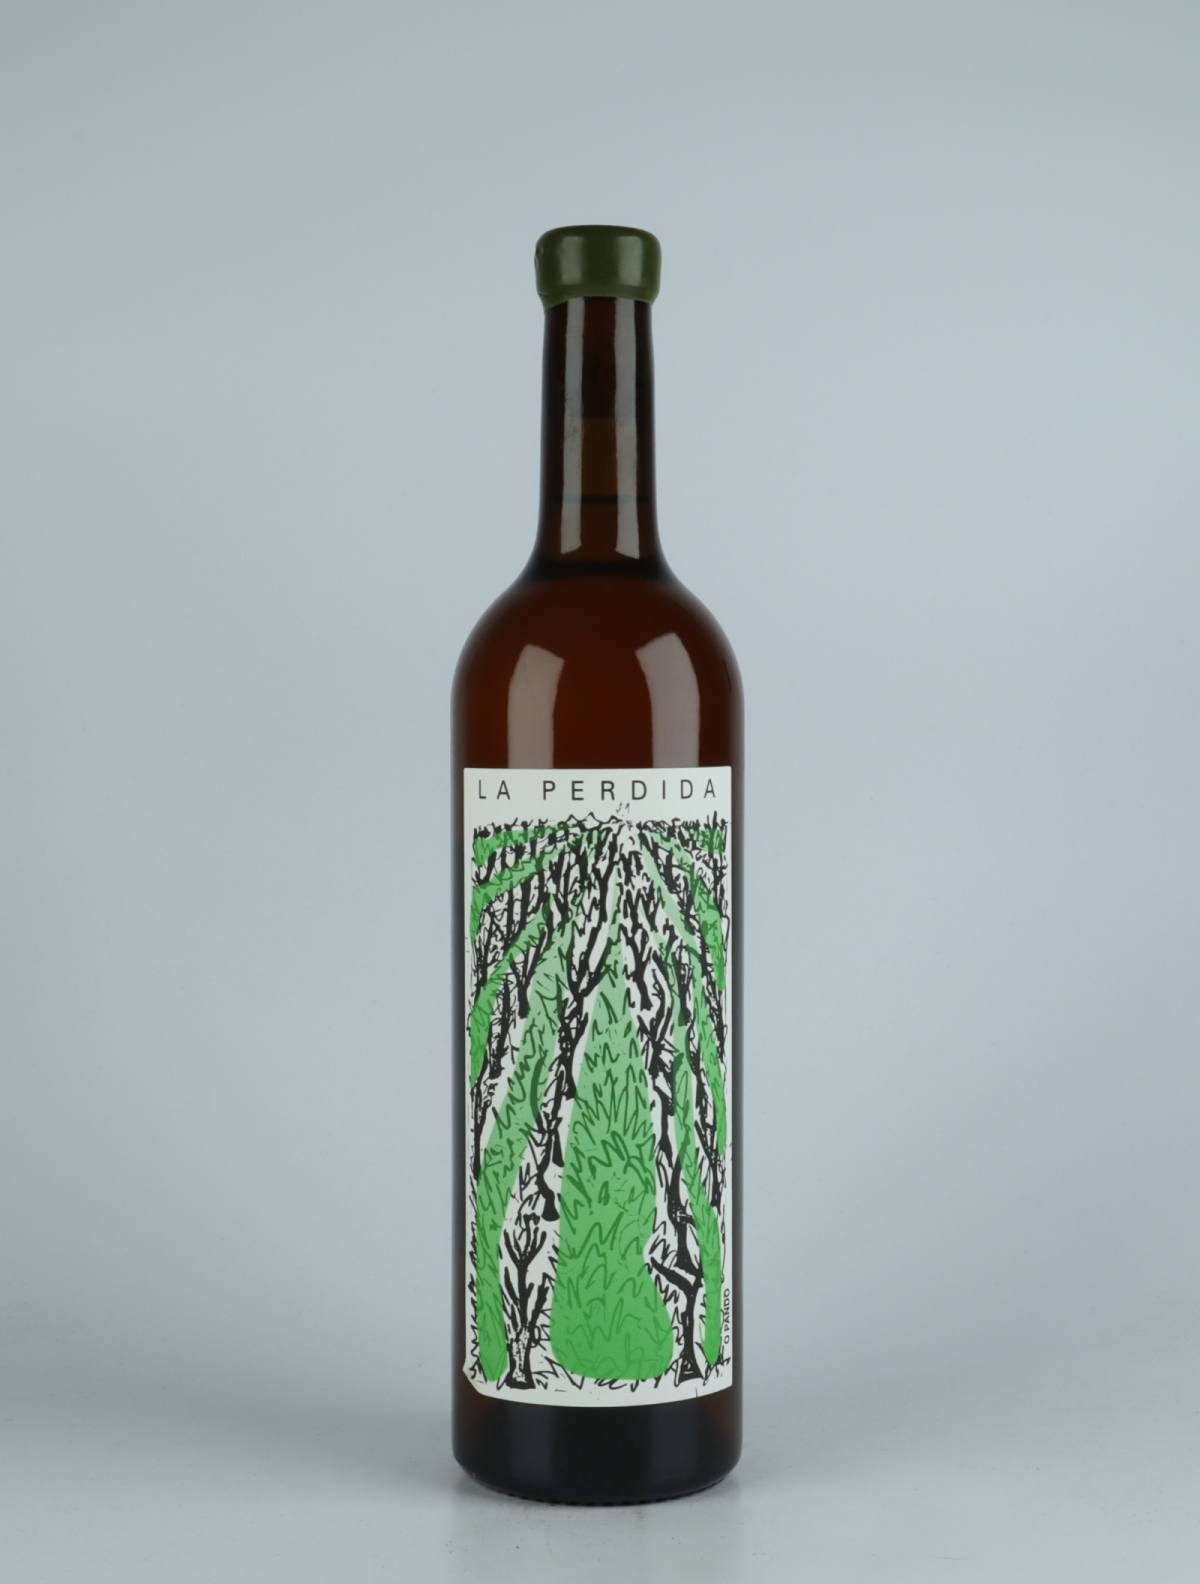 A bottle 2021 O Pando White wine from La Perdida, Ribeira Sacra in Spain